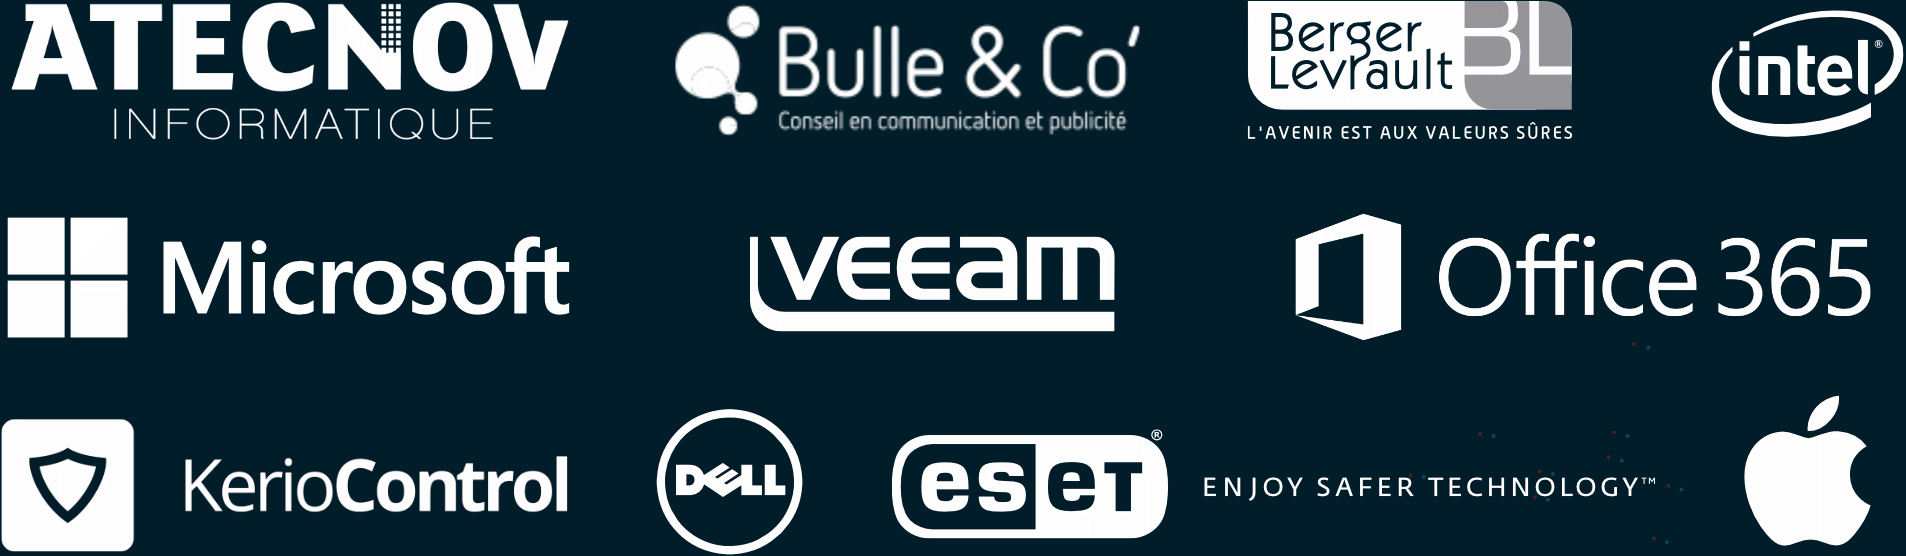 Atecnov Informatique, Bulle & Co', Berger Levrault, Intel, Microsoft, Weeam, Office 365, Kerio Control, Dell, ESET, Apple